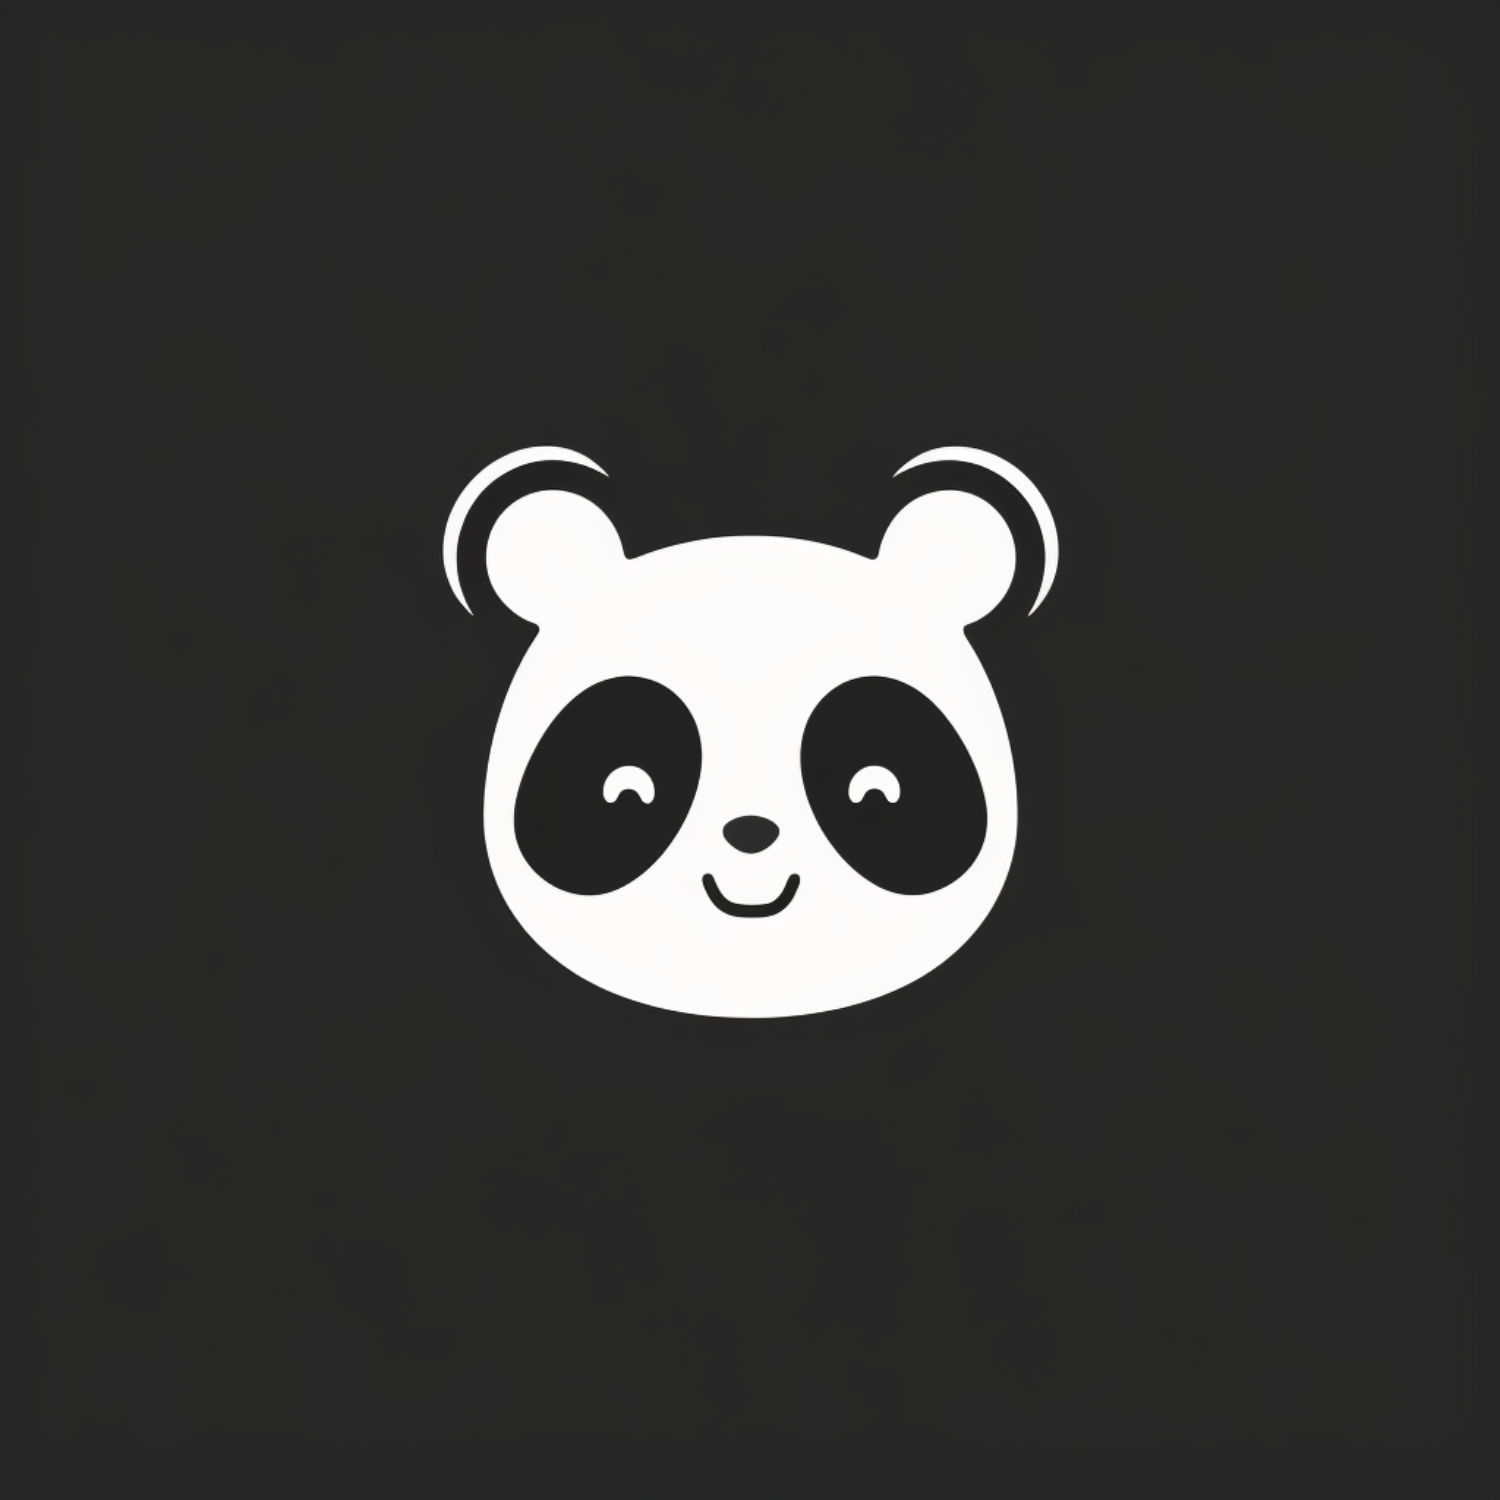 Panda-Logo-For-Childrens-Electronics-Brand